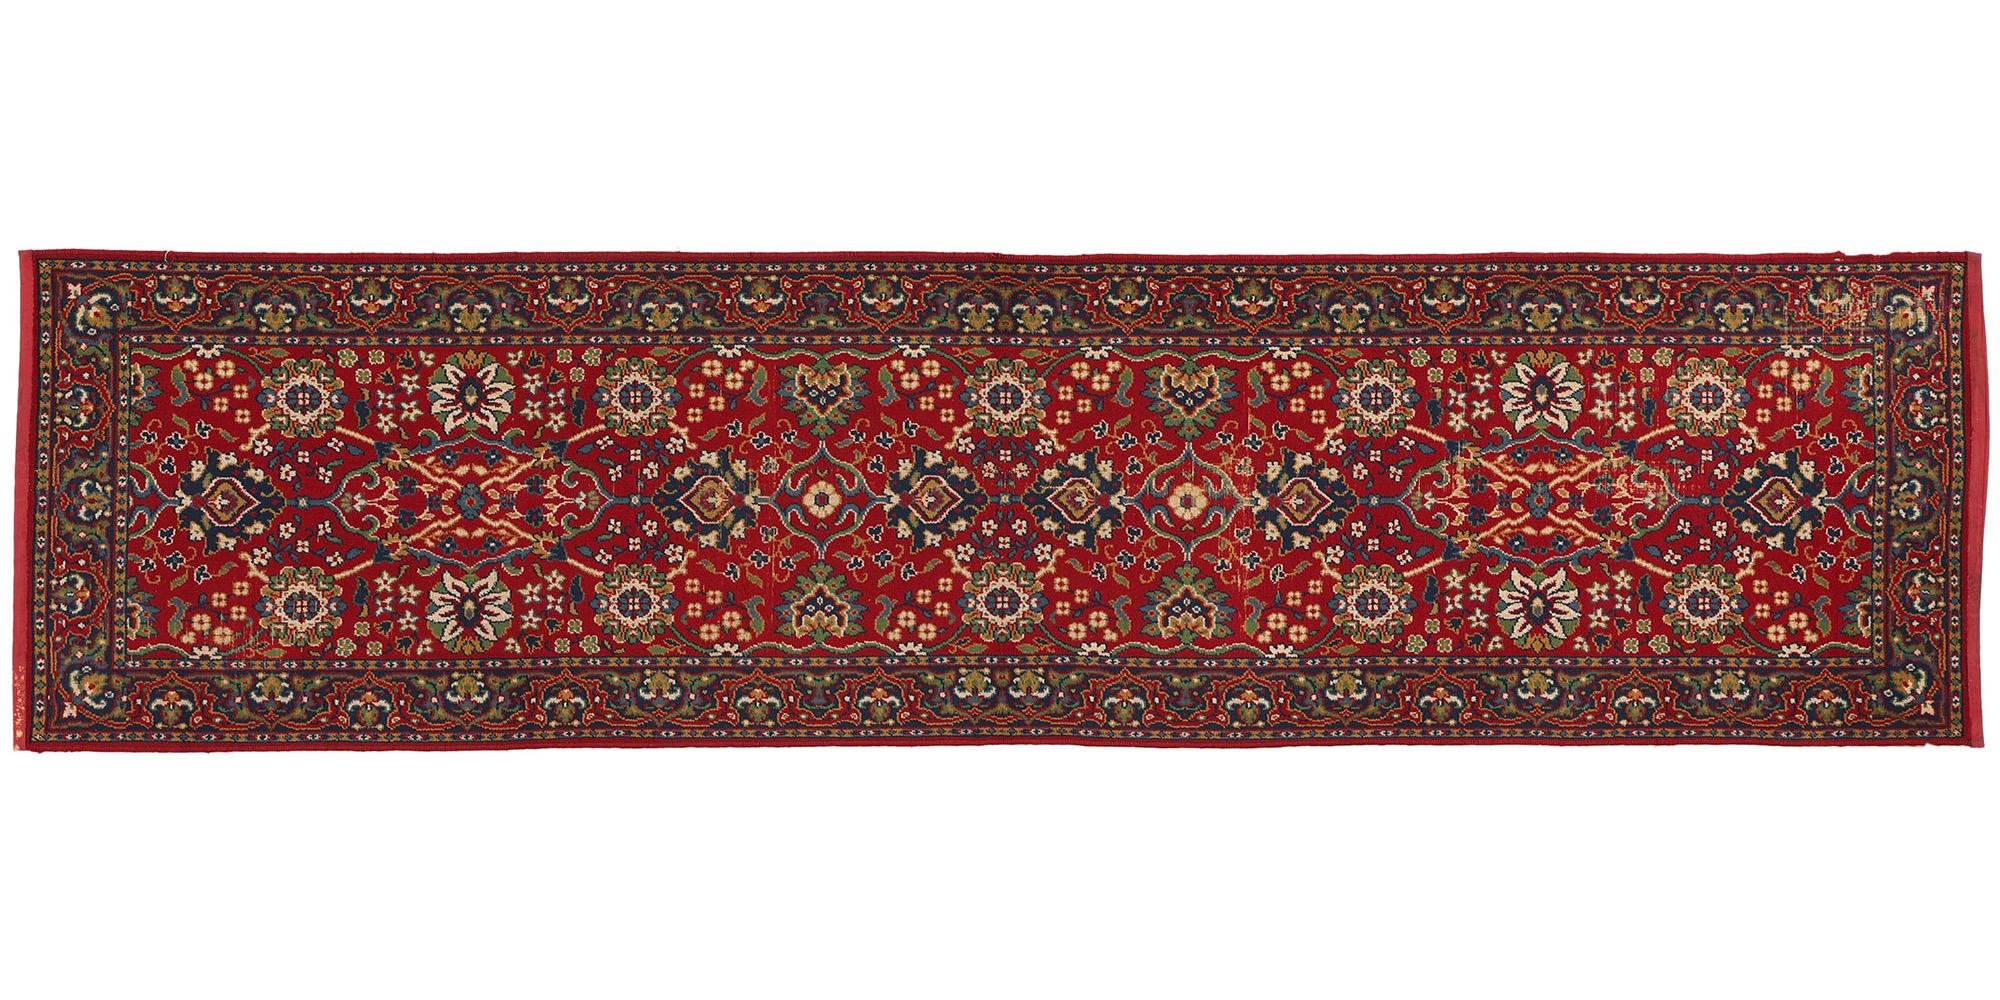 Antique European Persian Floral Rug For Sale 3